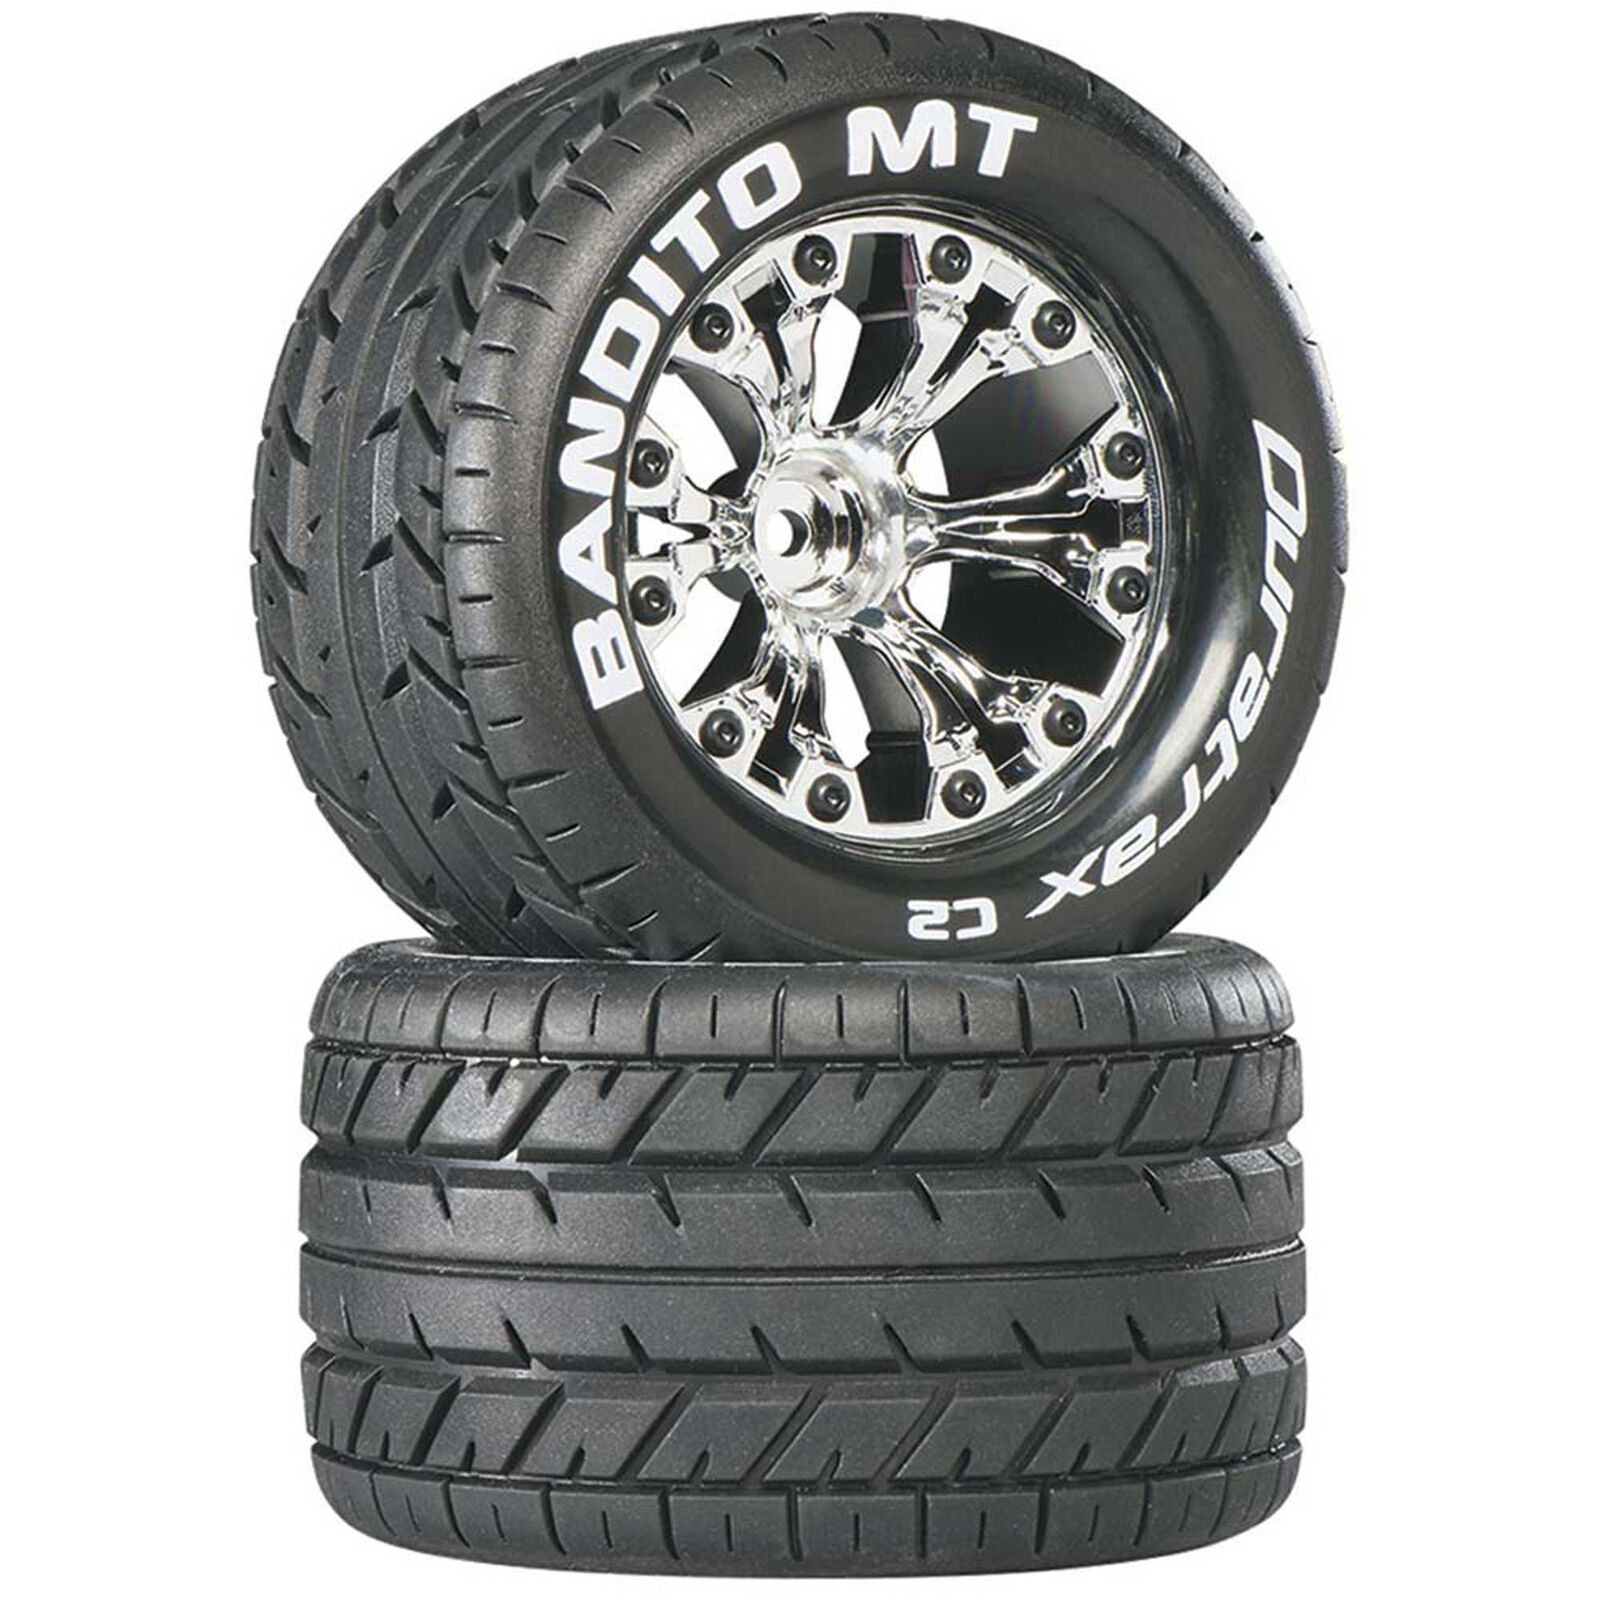 Bandito MT 2.8" Mounted 1/2" Offset Tires, Chrome (2)